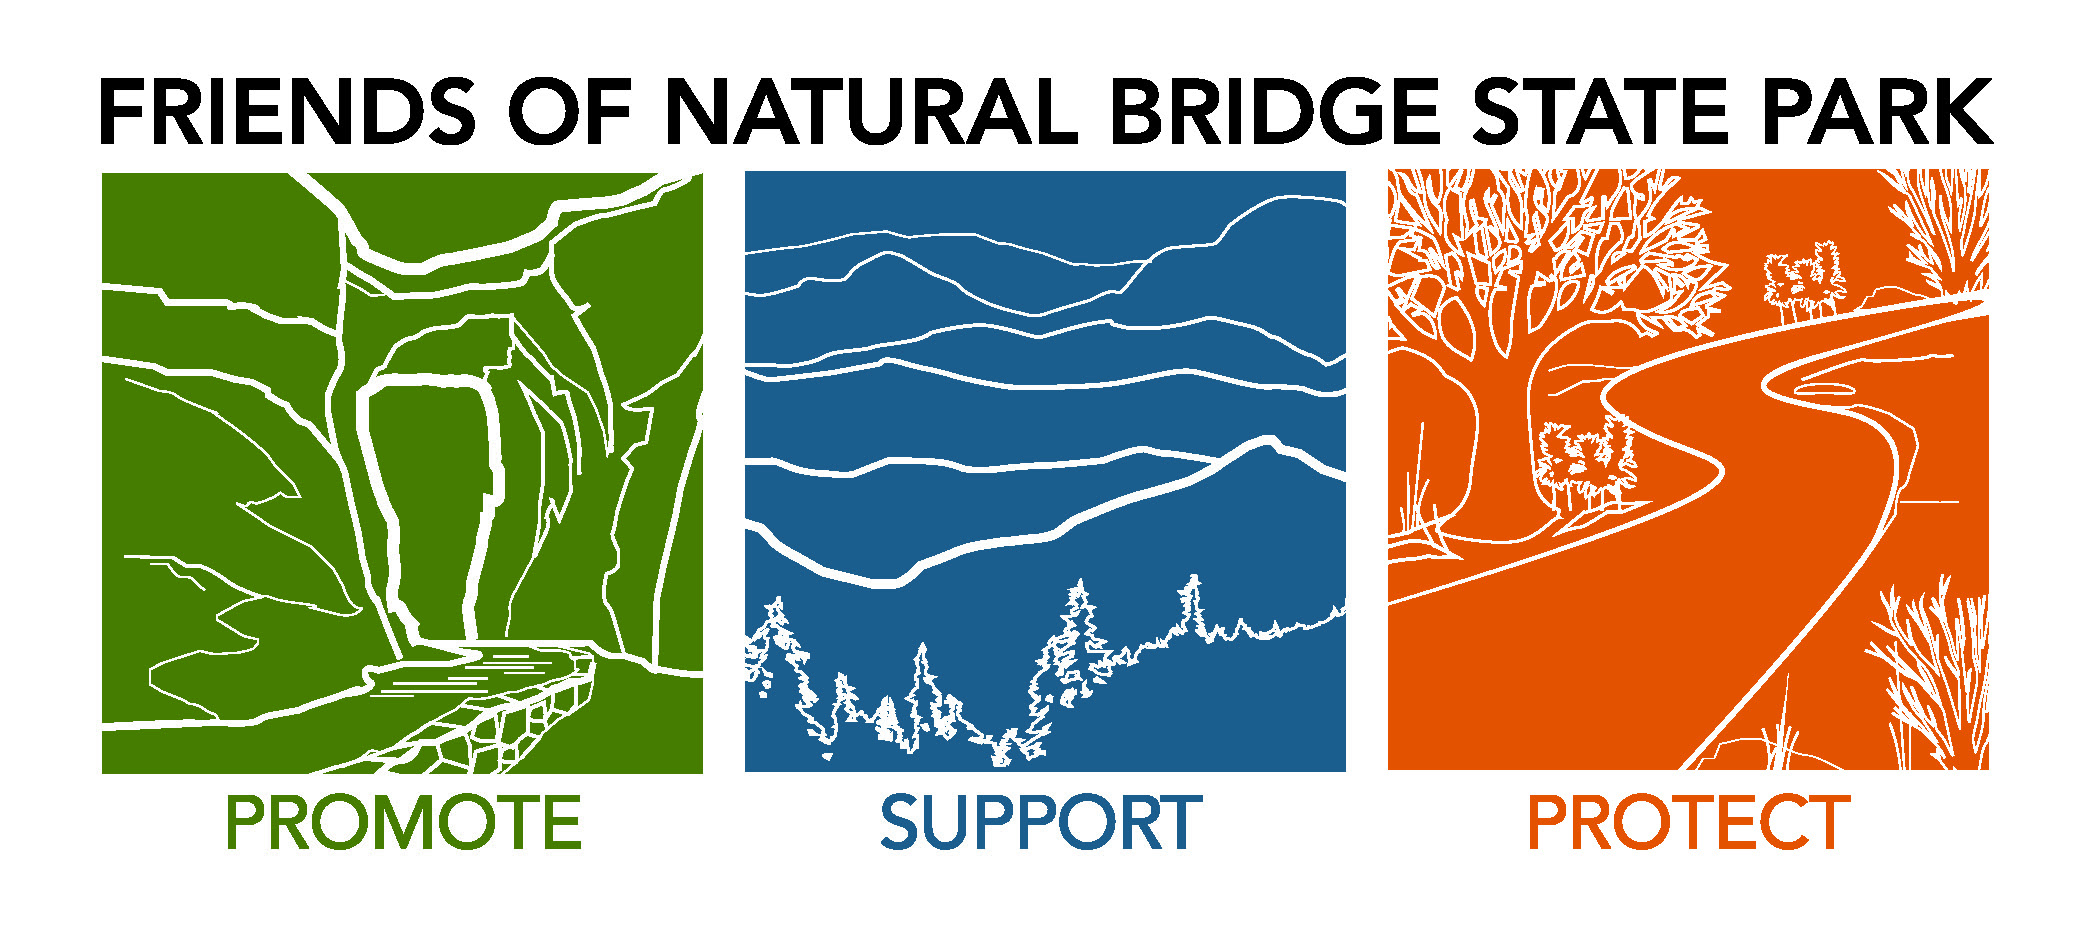 Friends of Natural Bridge State Park